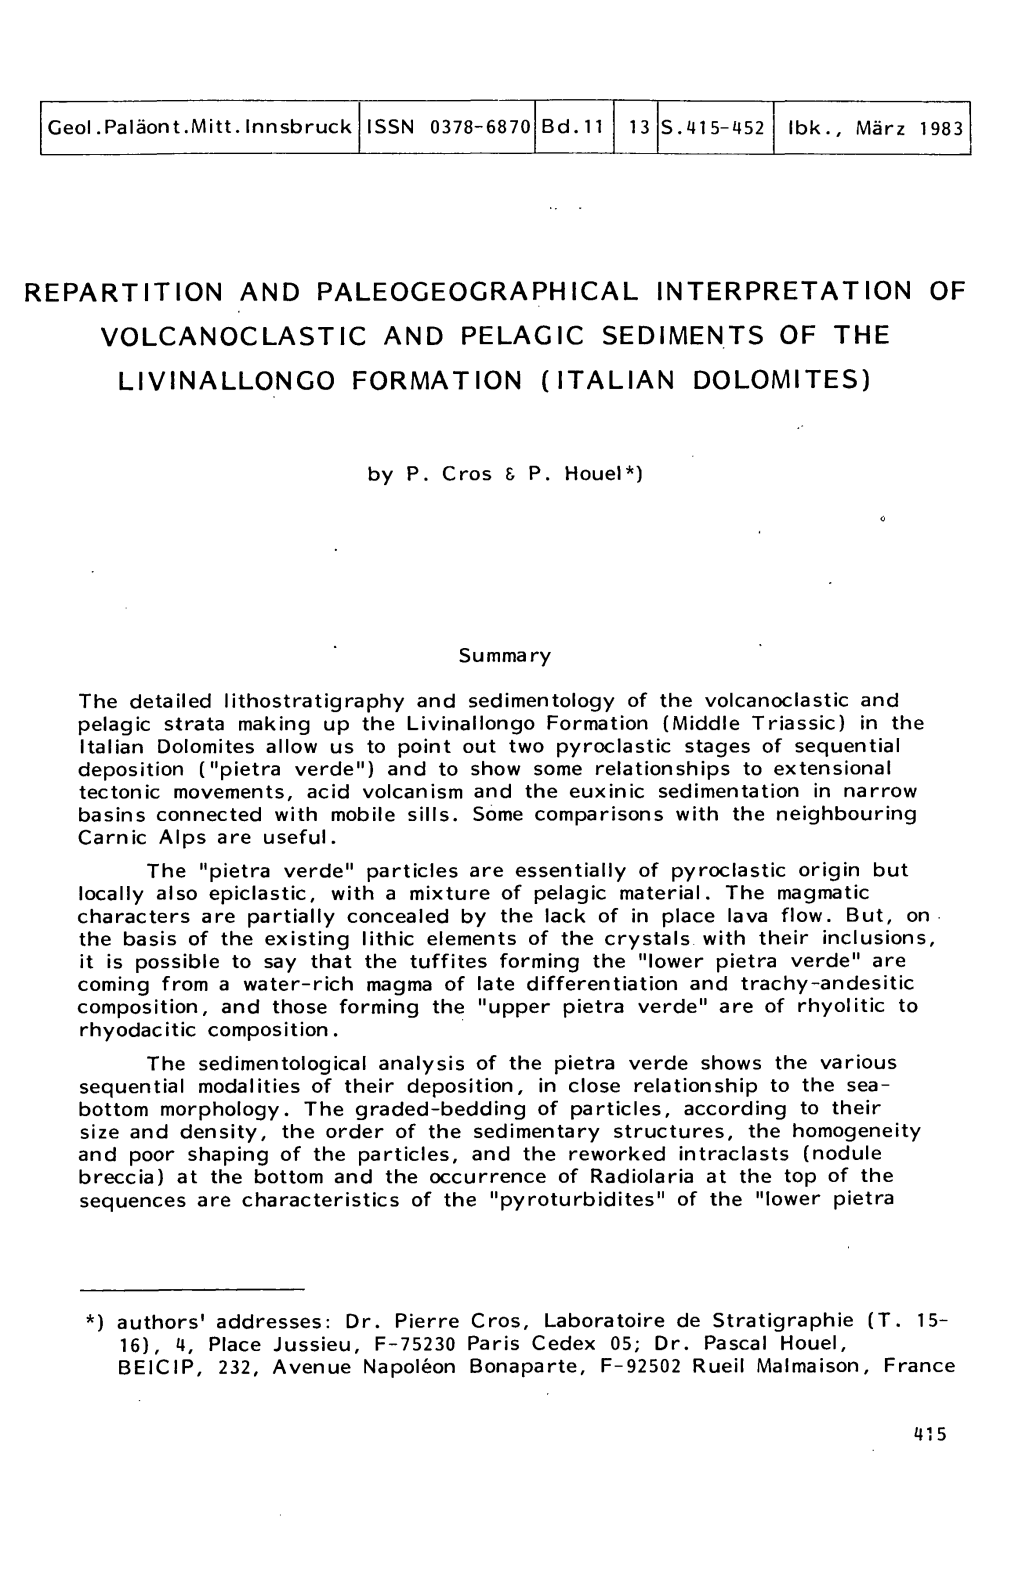 Repartition and Paleogeocraphical Interpretation of Volcanoclastic and Pelagic Sediments of the Livinallonco Formation (Italian Dolomites)